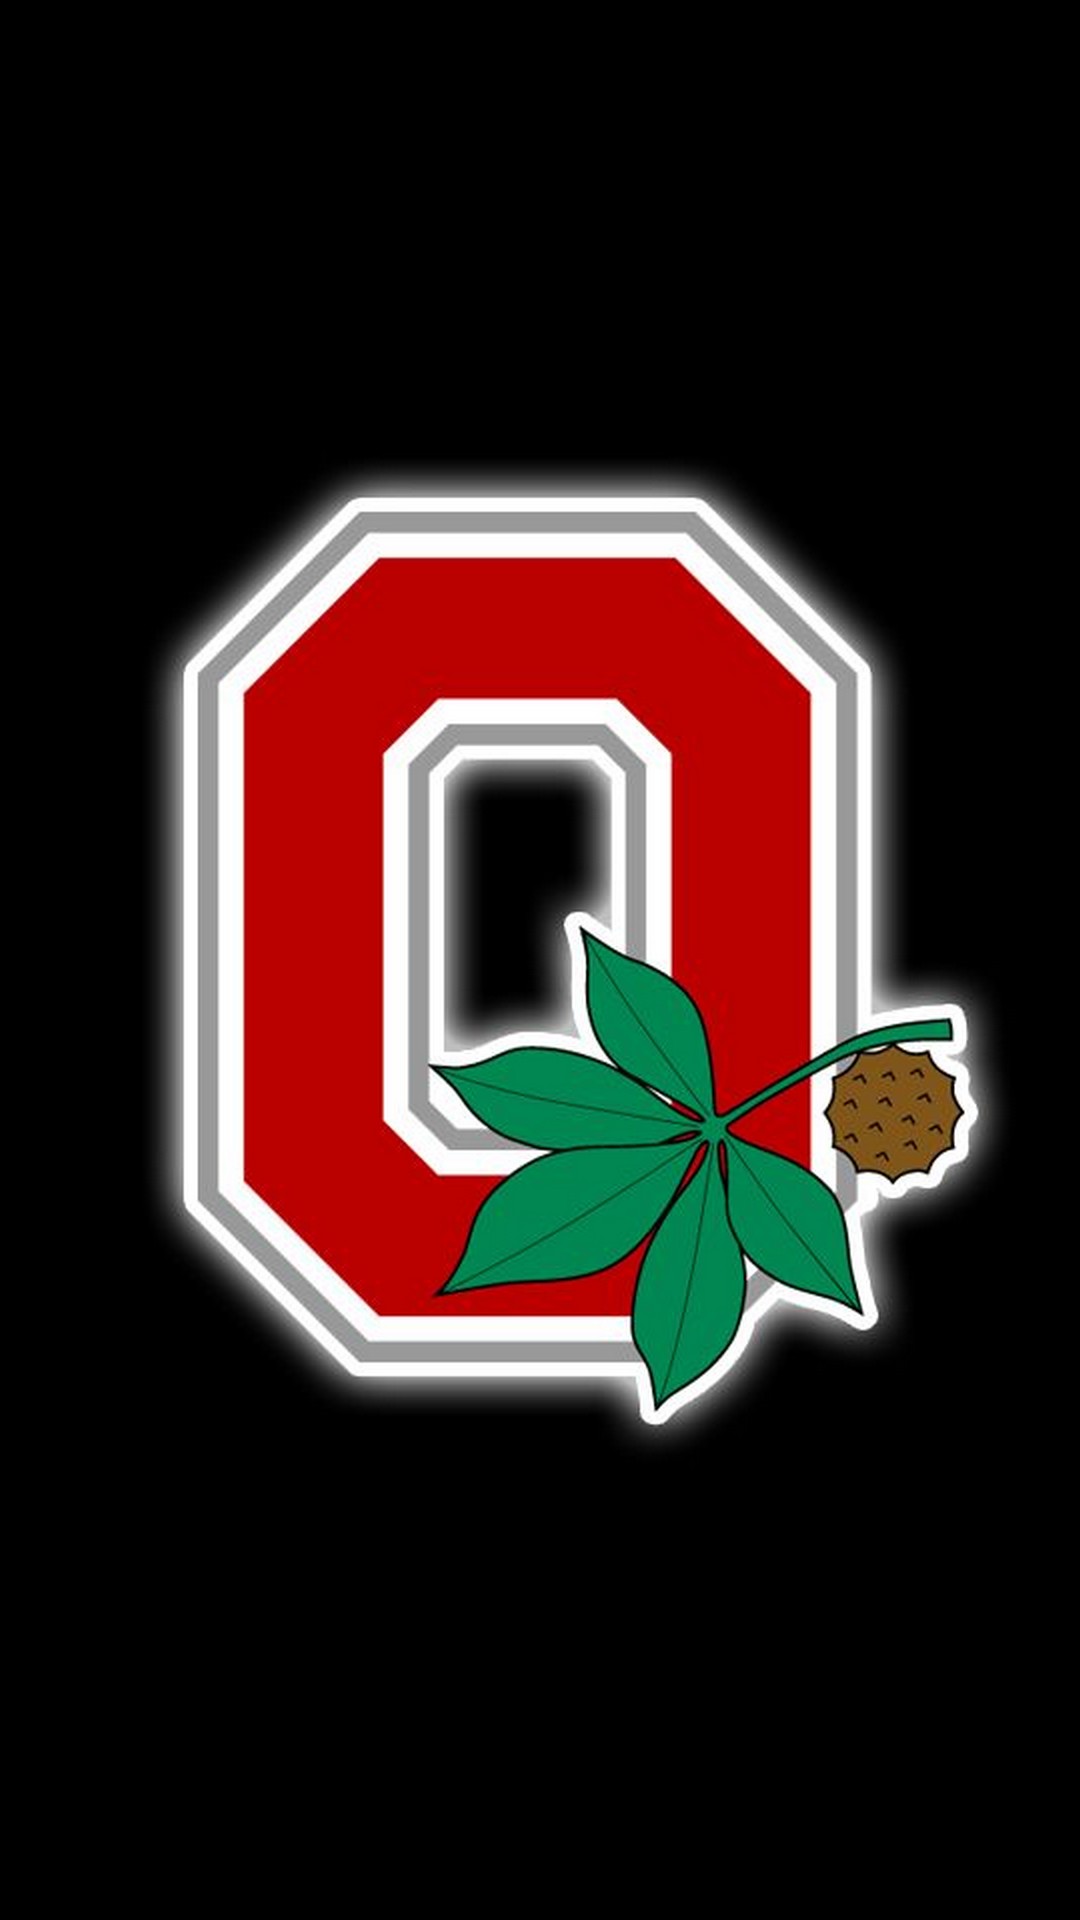 ohio state iphone wallpaper,grün,blatt,rot,illustration,emblem